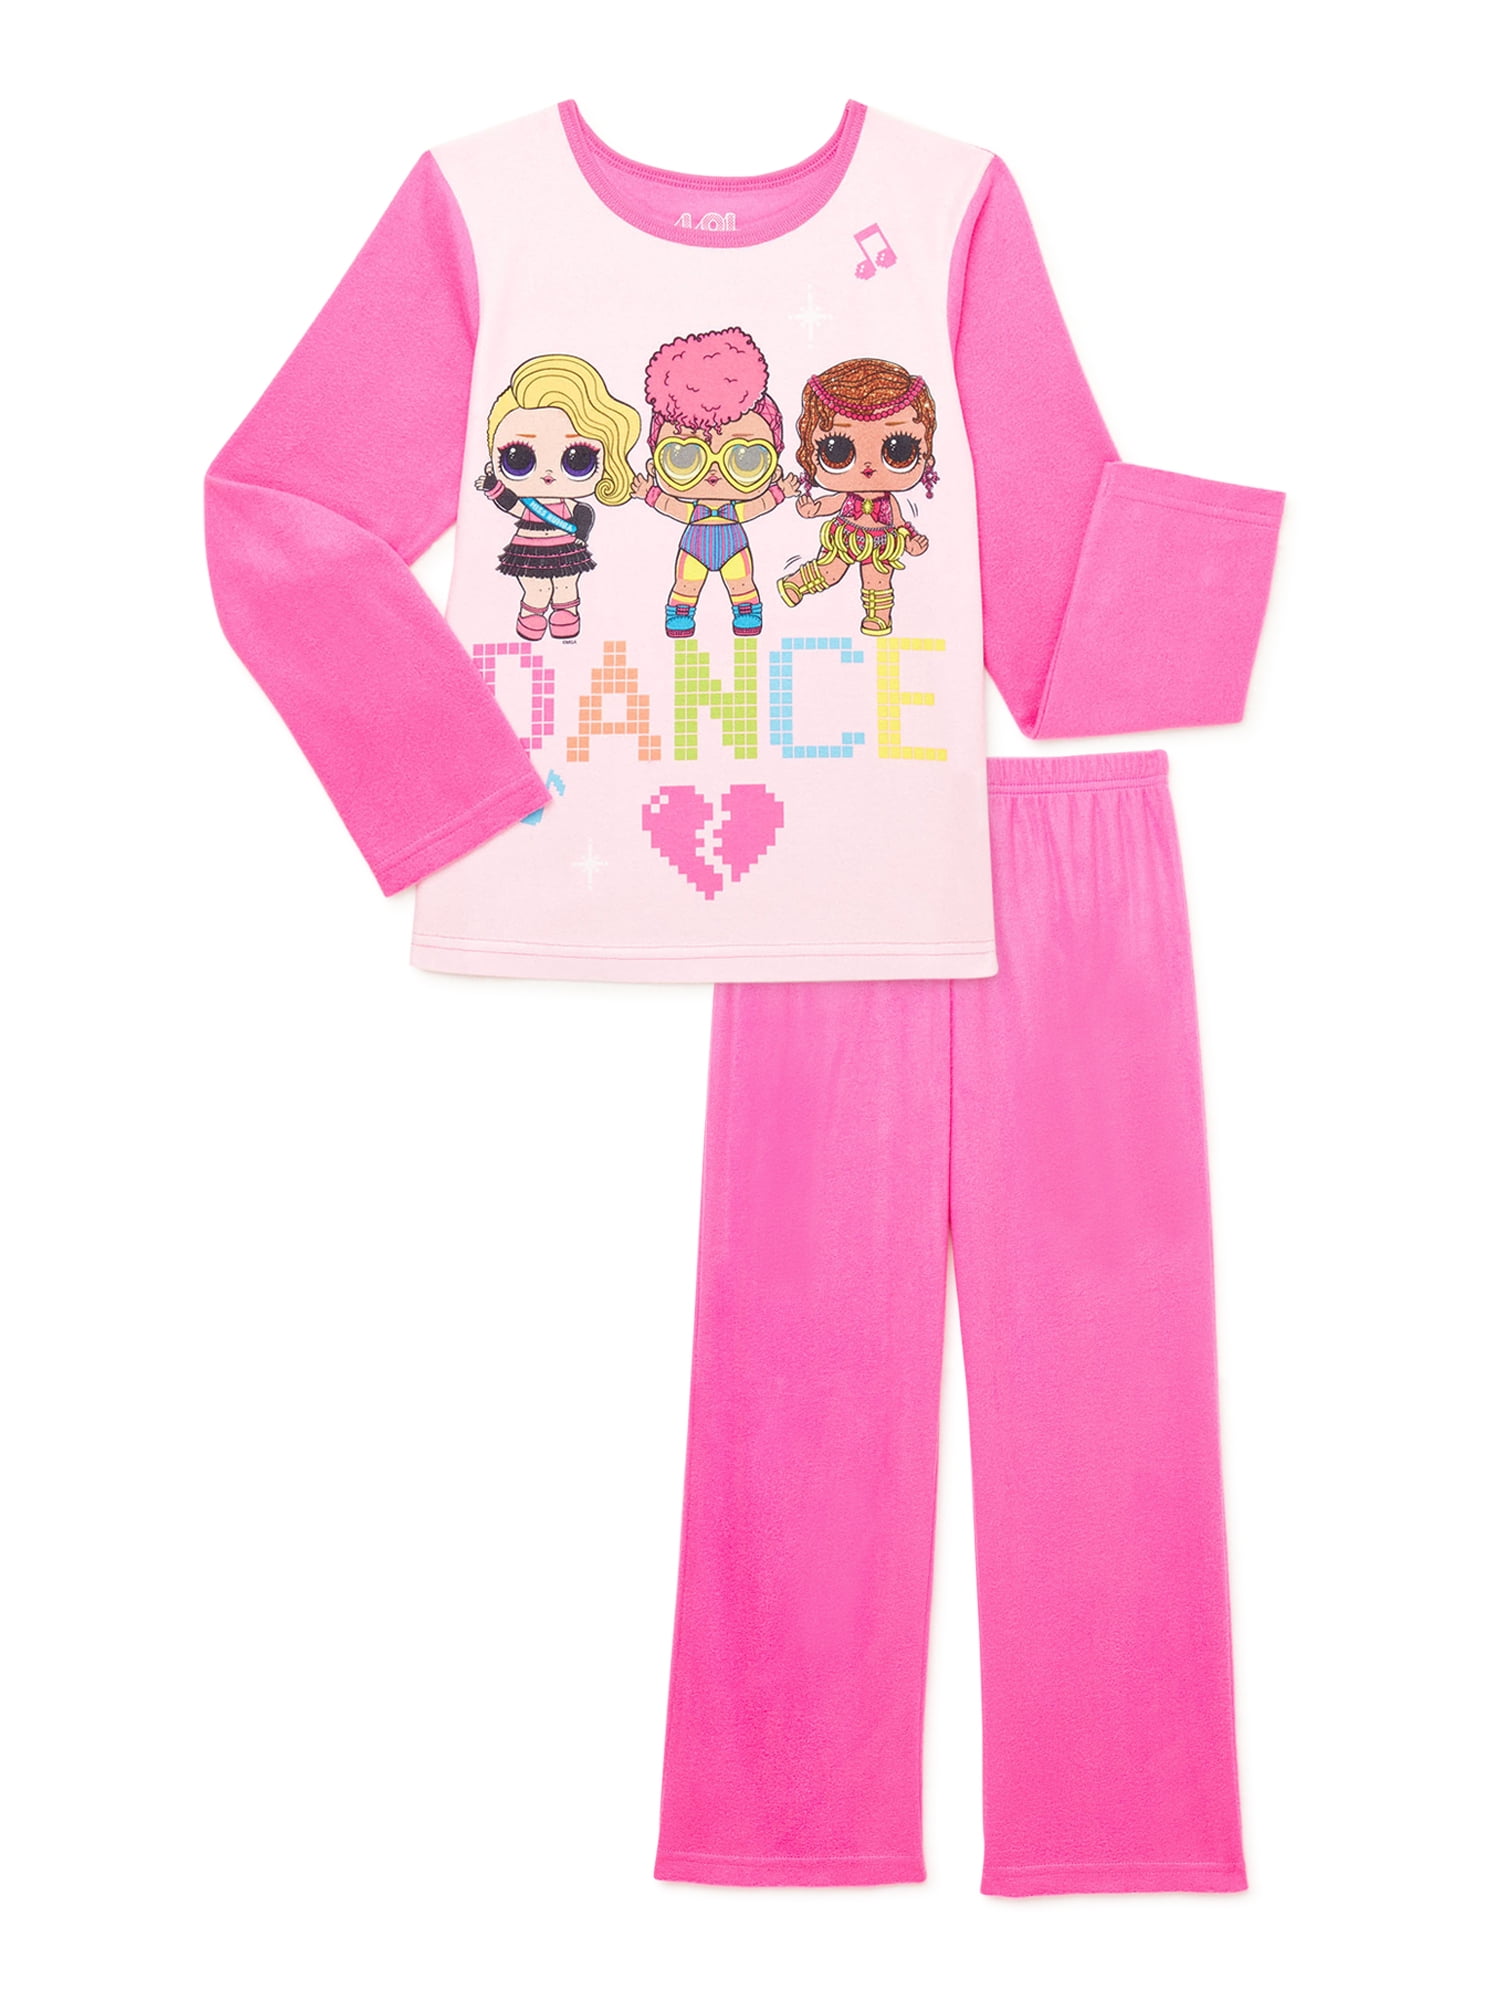 LOL Surprise Doll Girls One Piece Pajamas Size 4 - 10 Union Suit